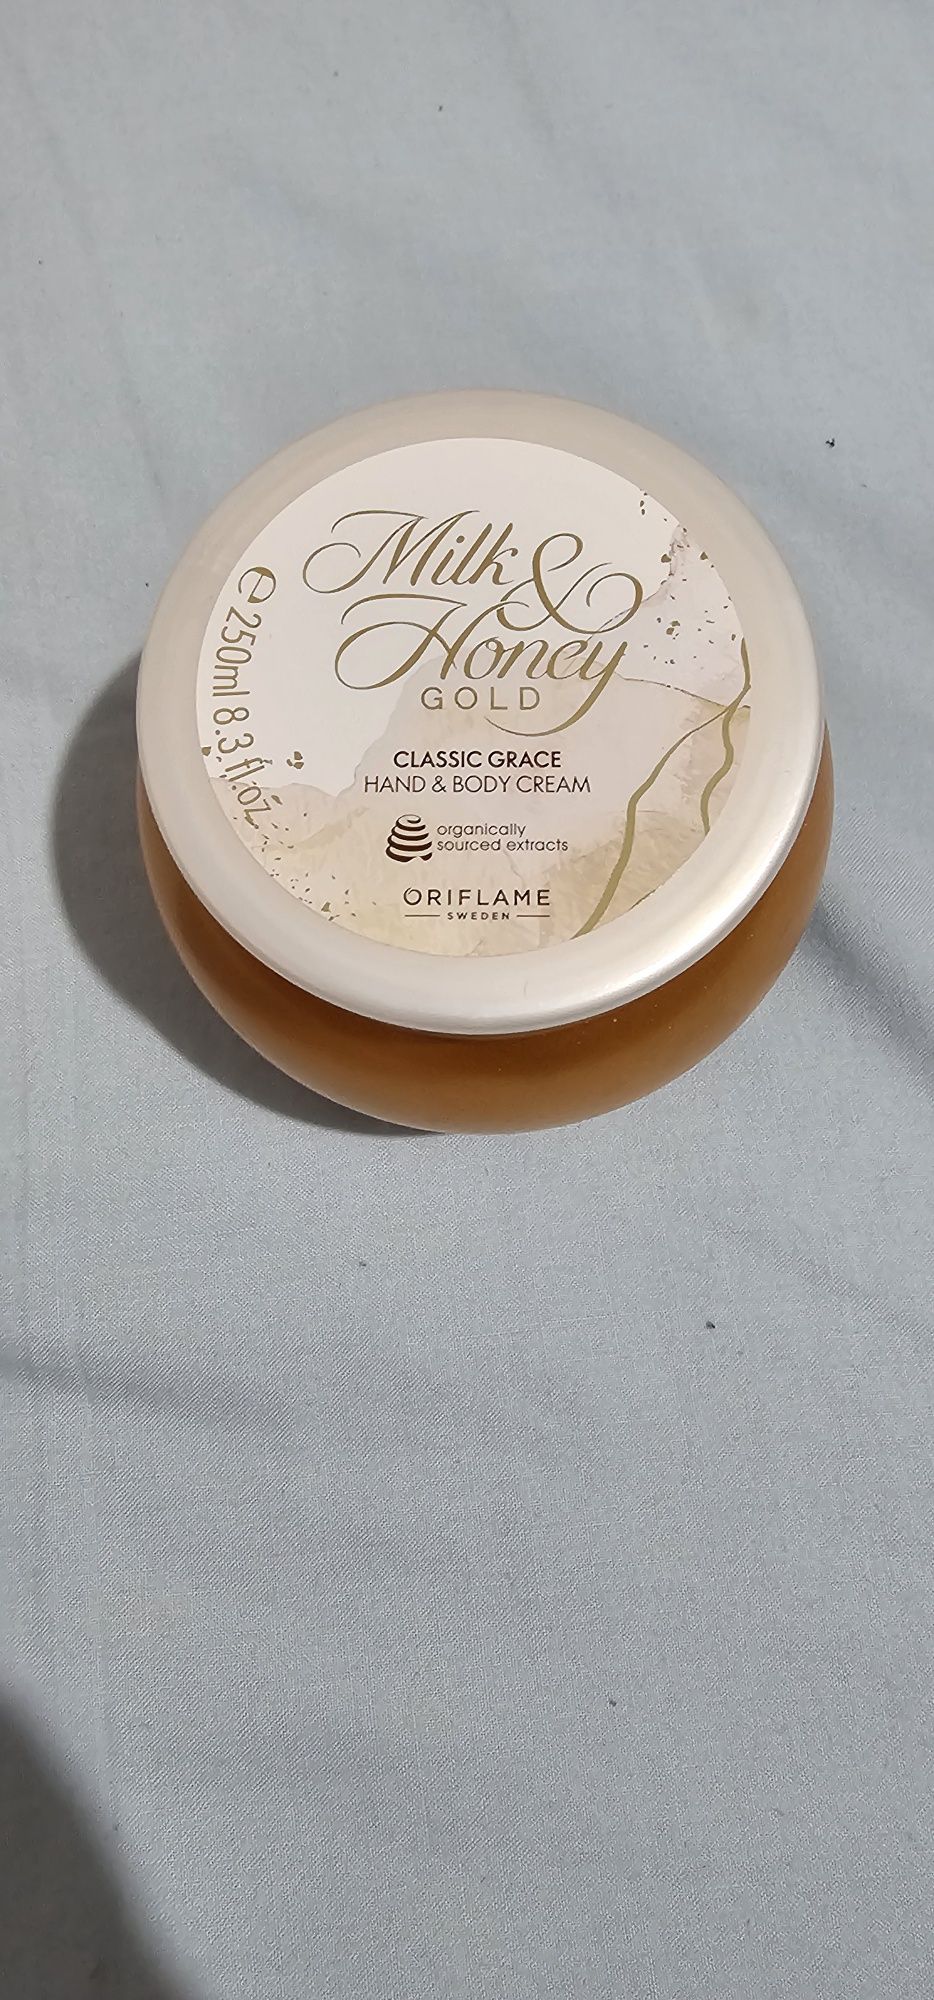 Oriflame Milk & Honey Gold Classic Grace crema corp